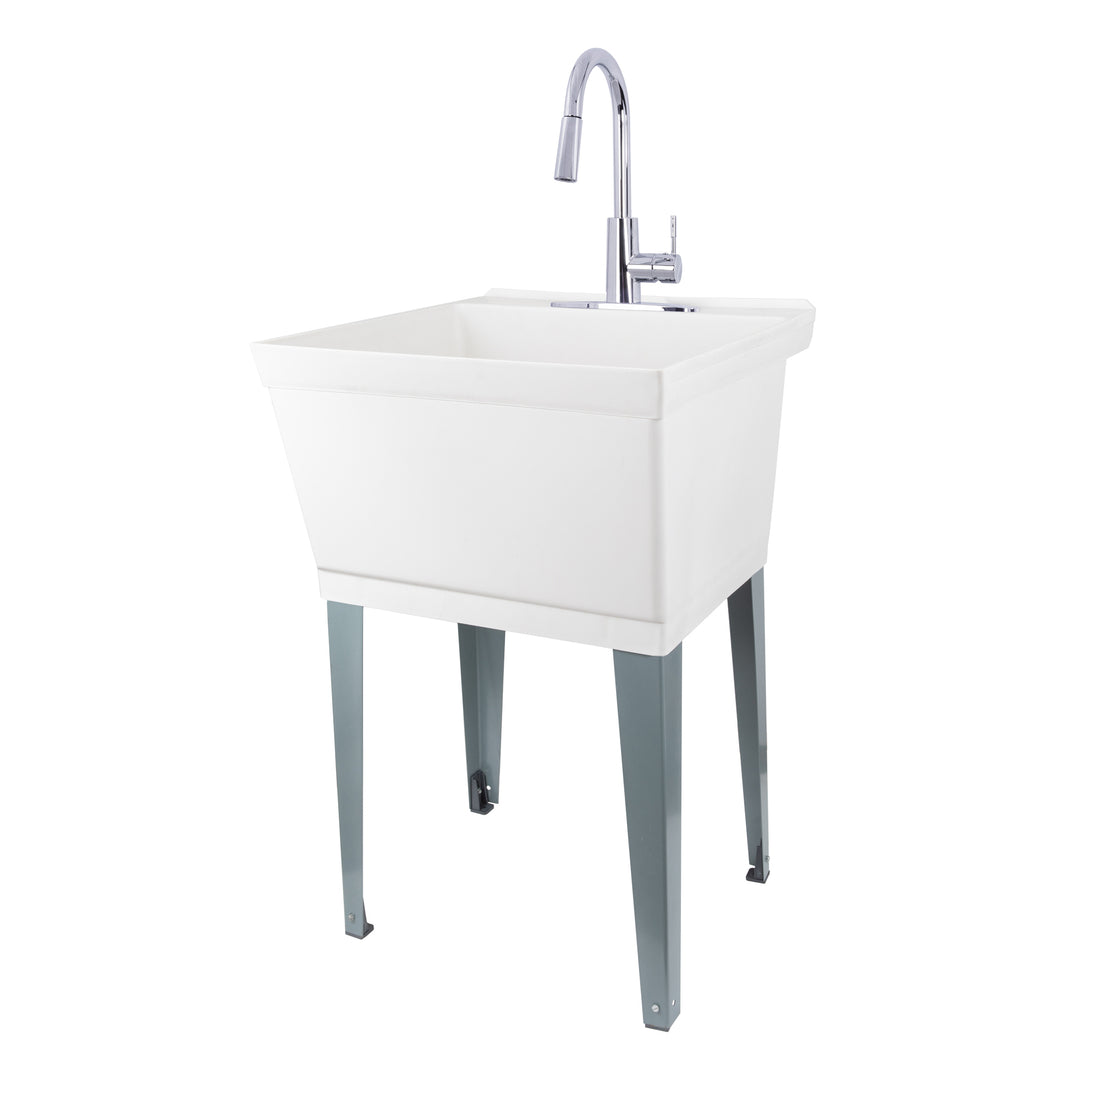 Tehila Standard Freestanding White Utility Sink with Chrome Finish High-Arc Pull-Down Faucet - Utility sinks vanites Tehila